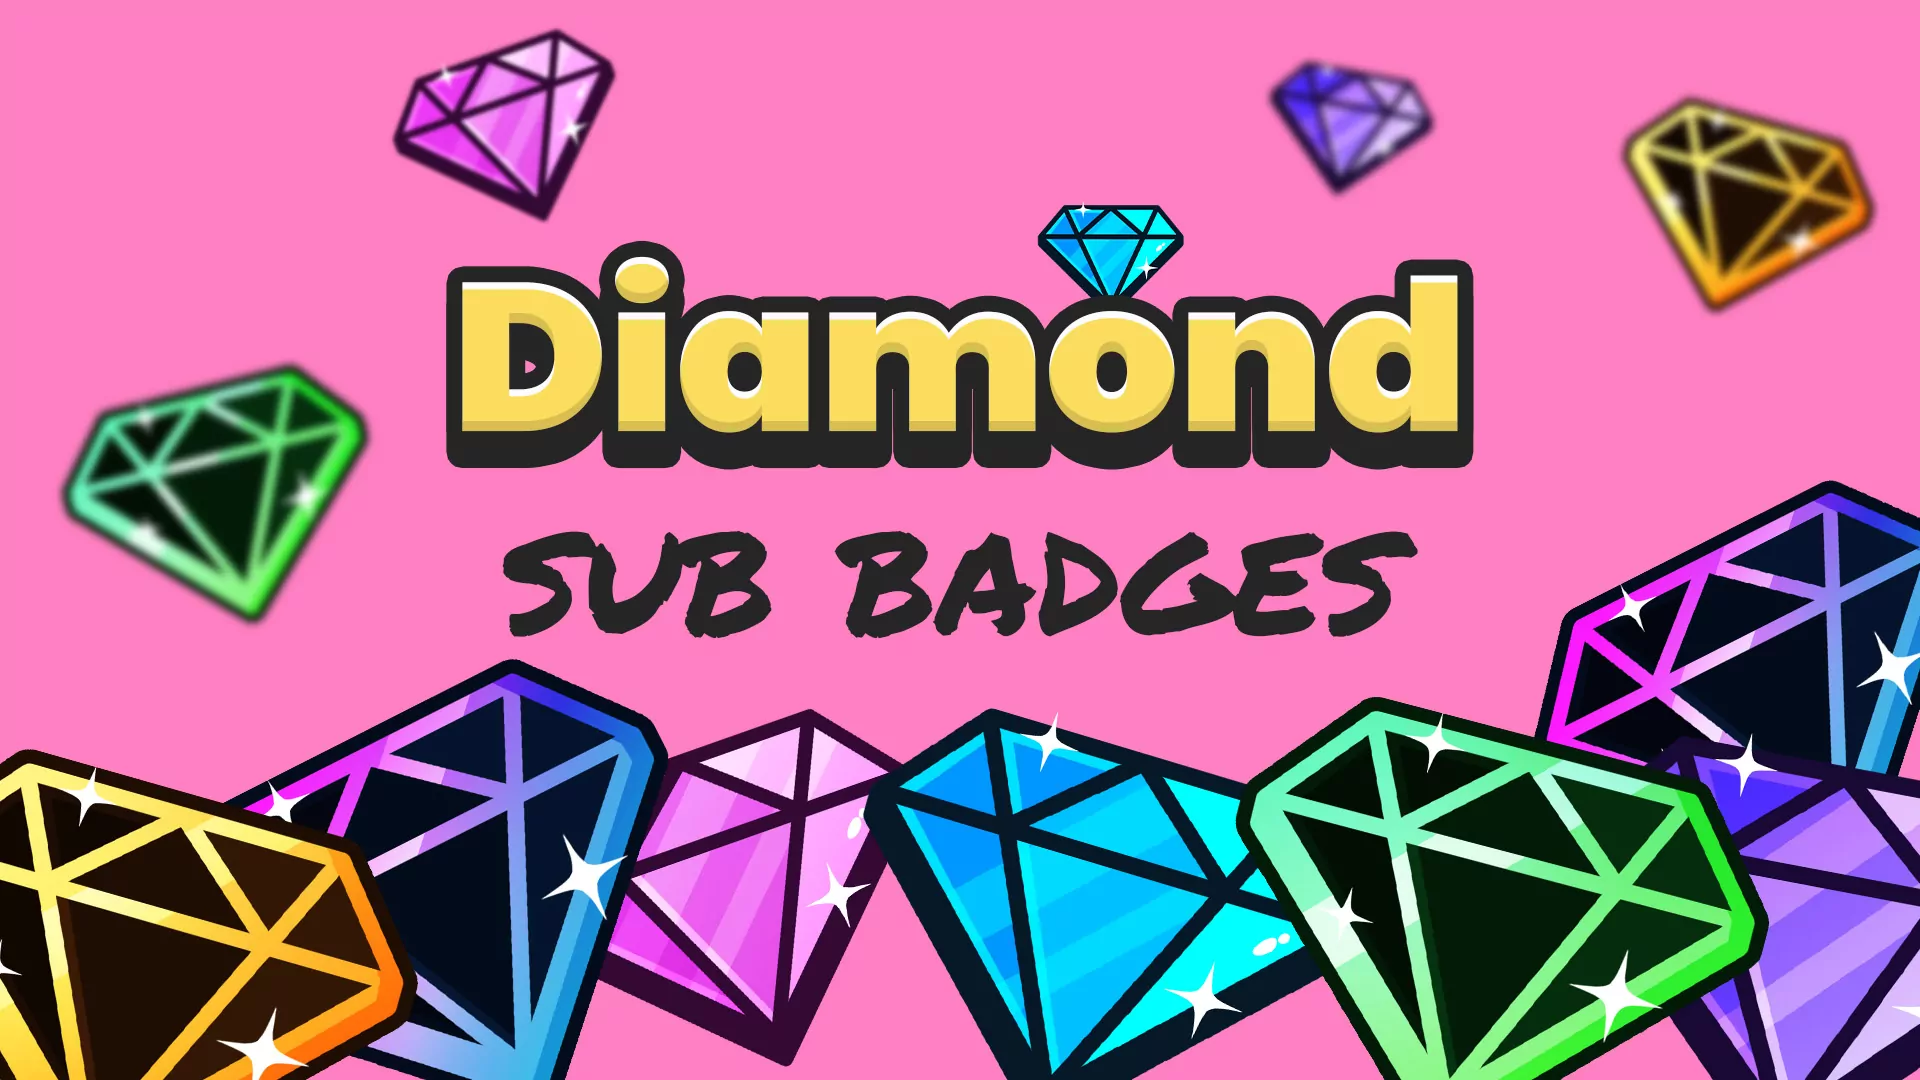 Diamond Sub Badges - Main Image